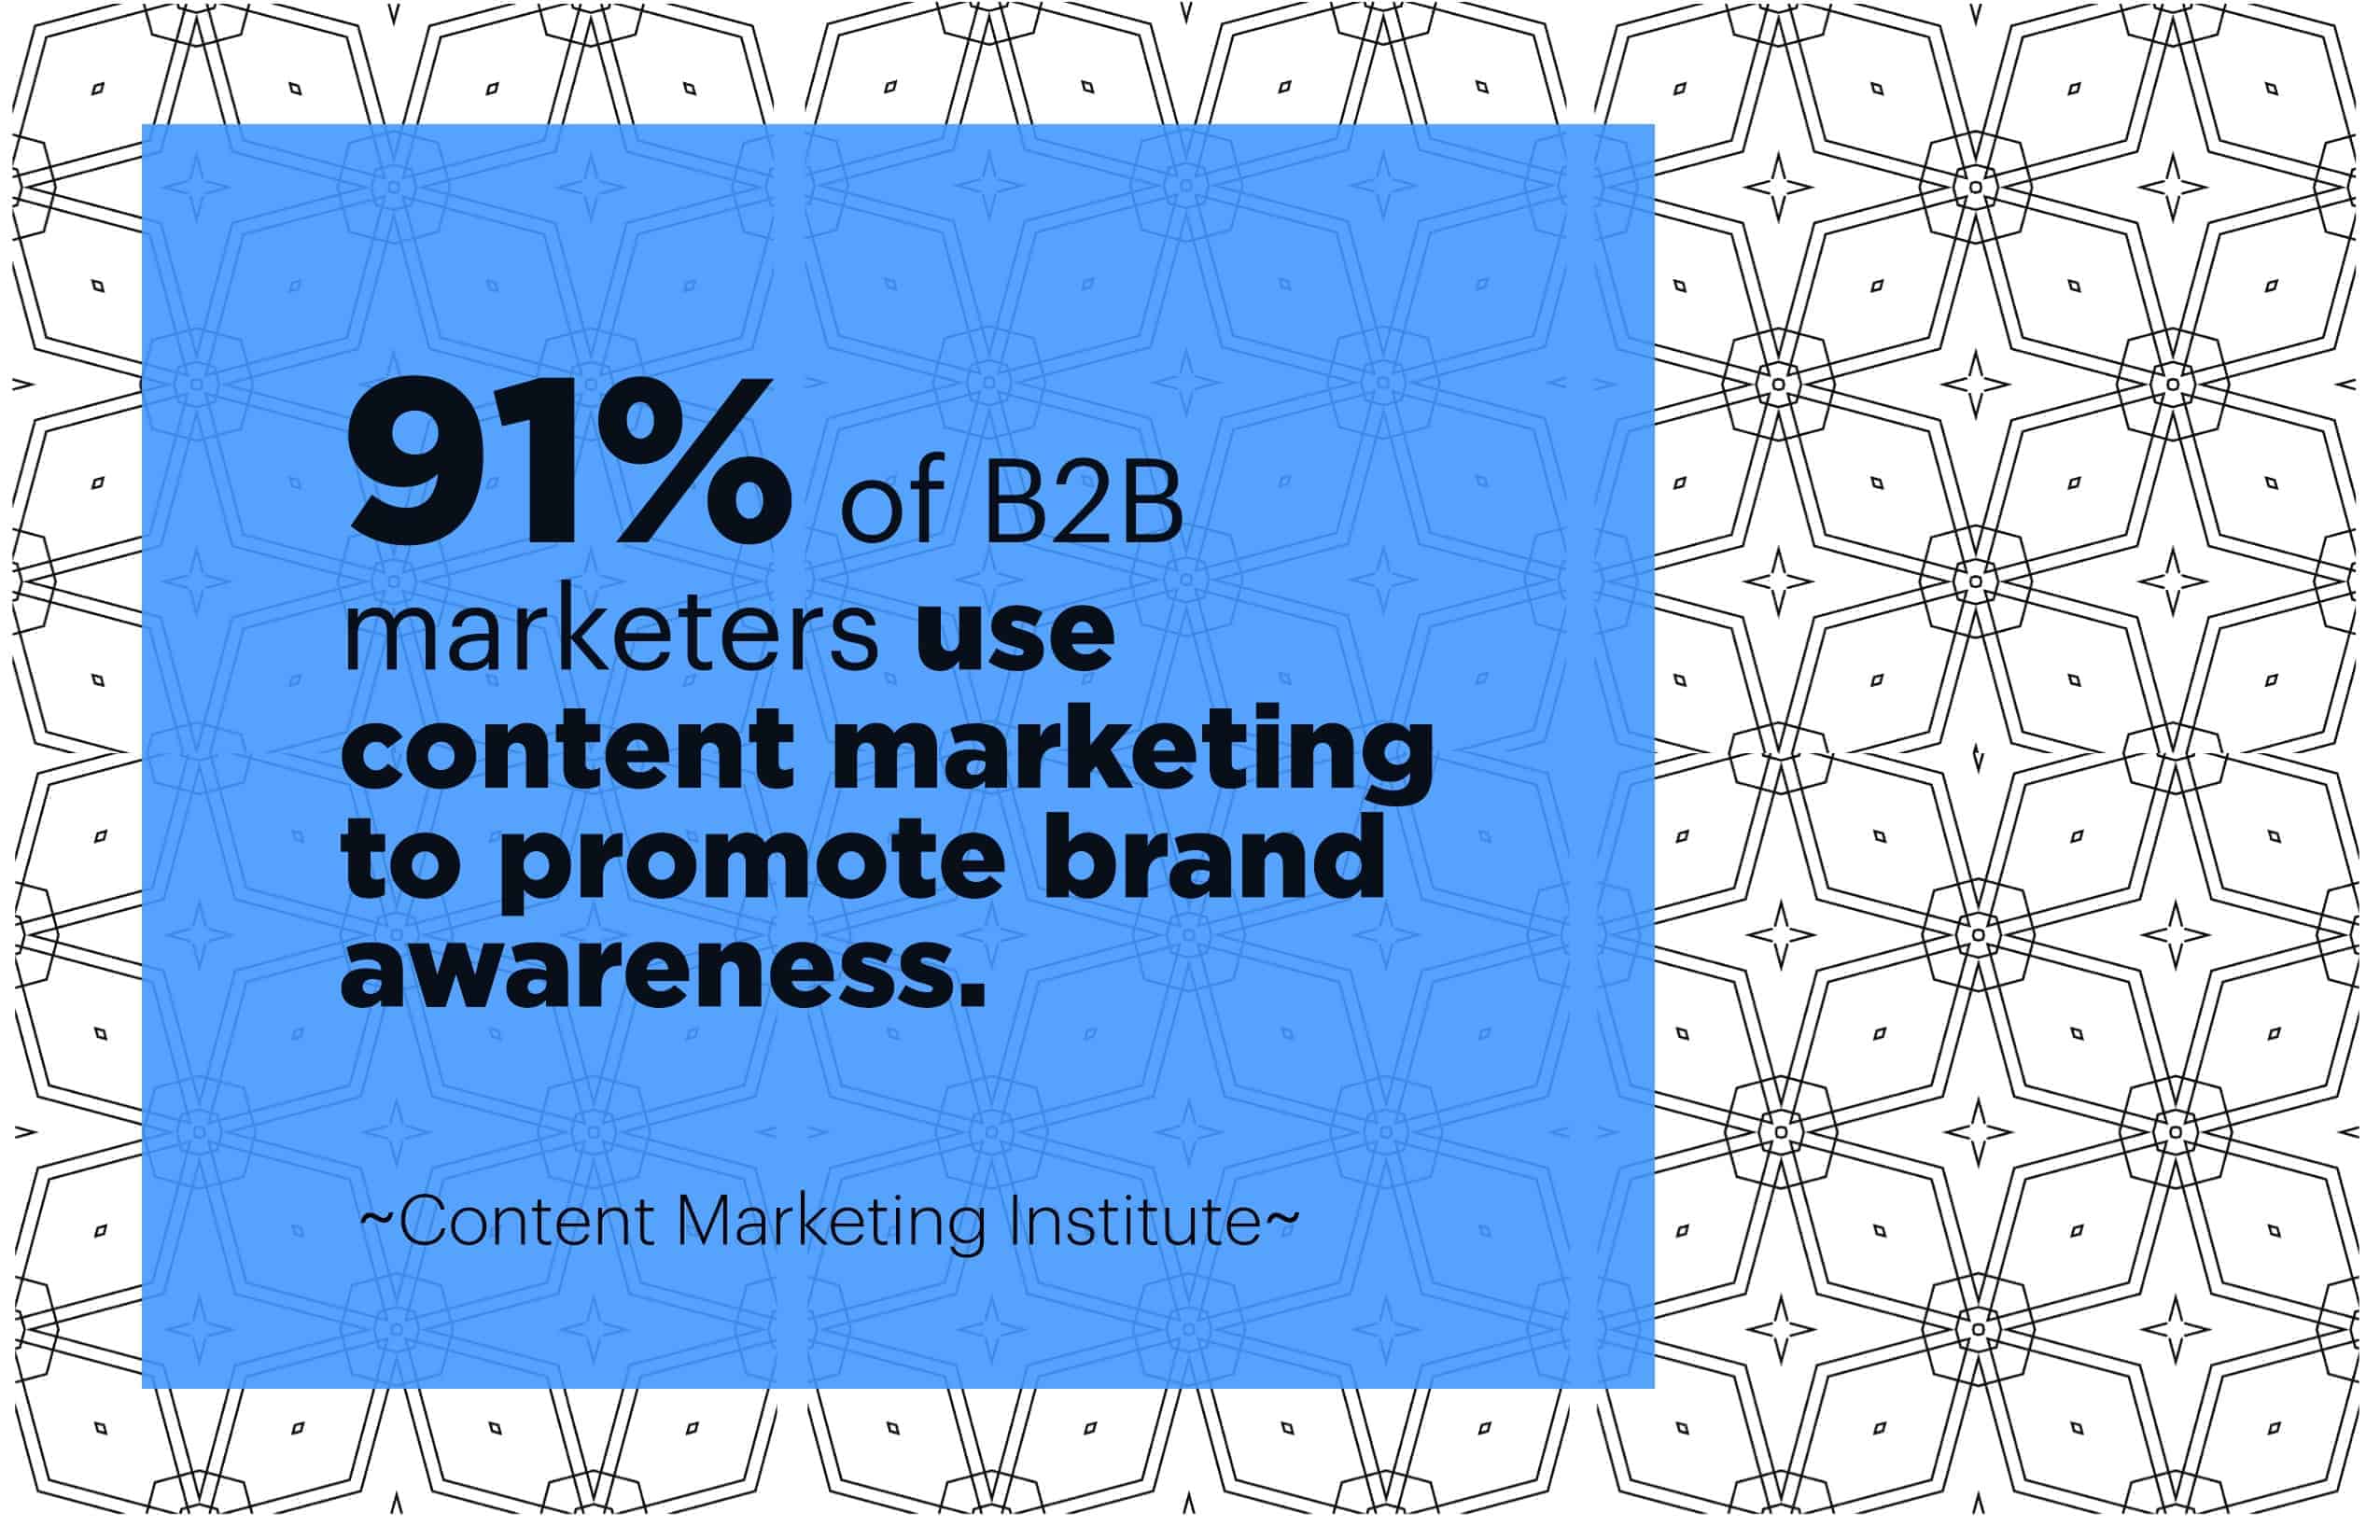 Customer engagement brand awareness statistic